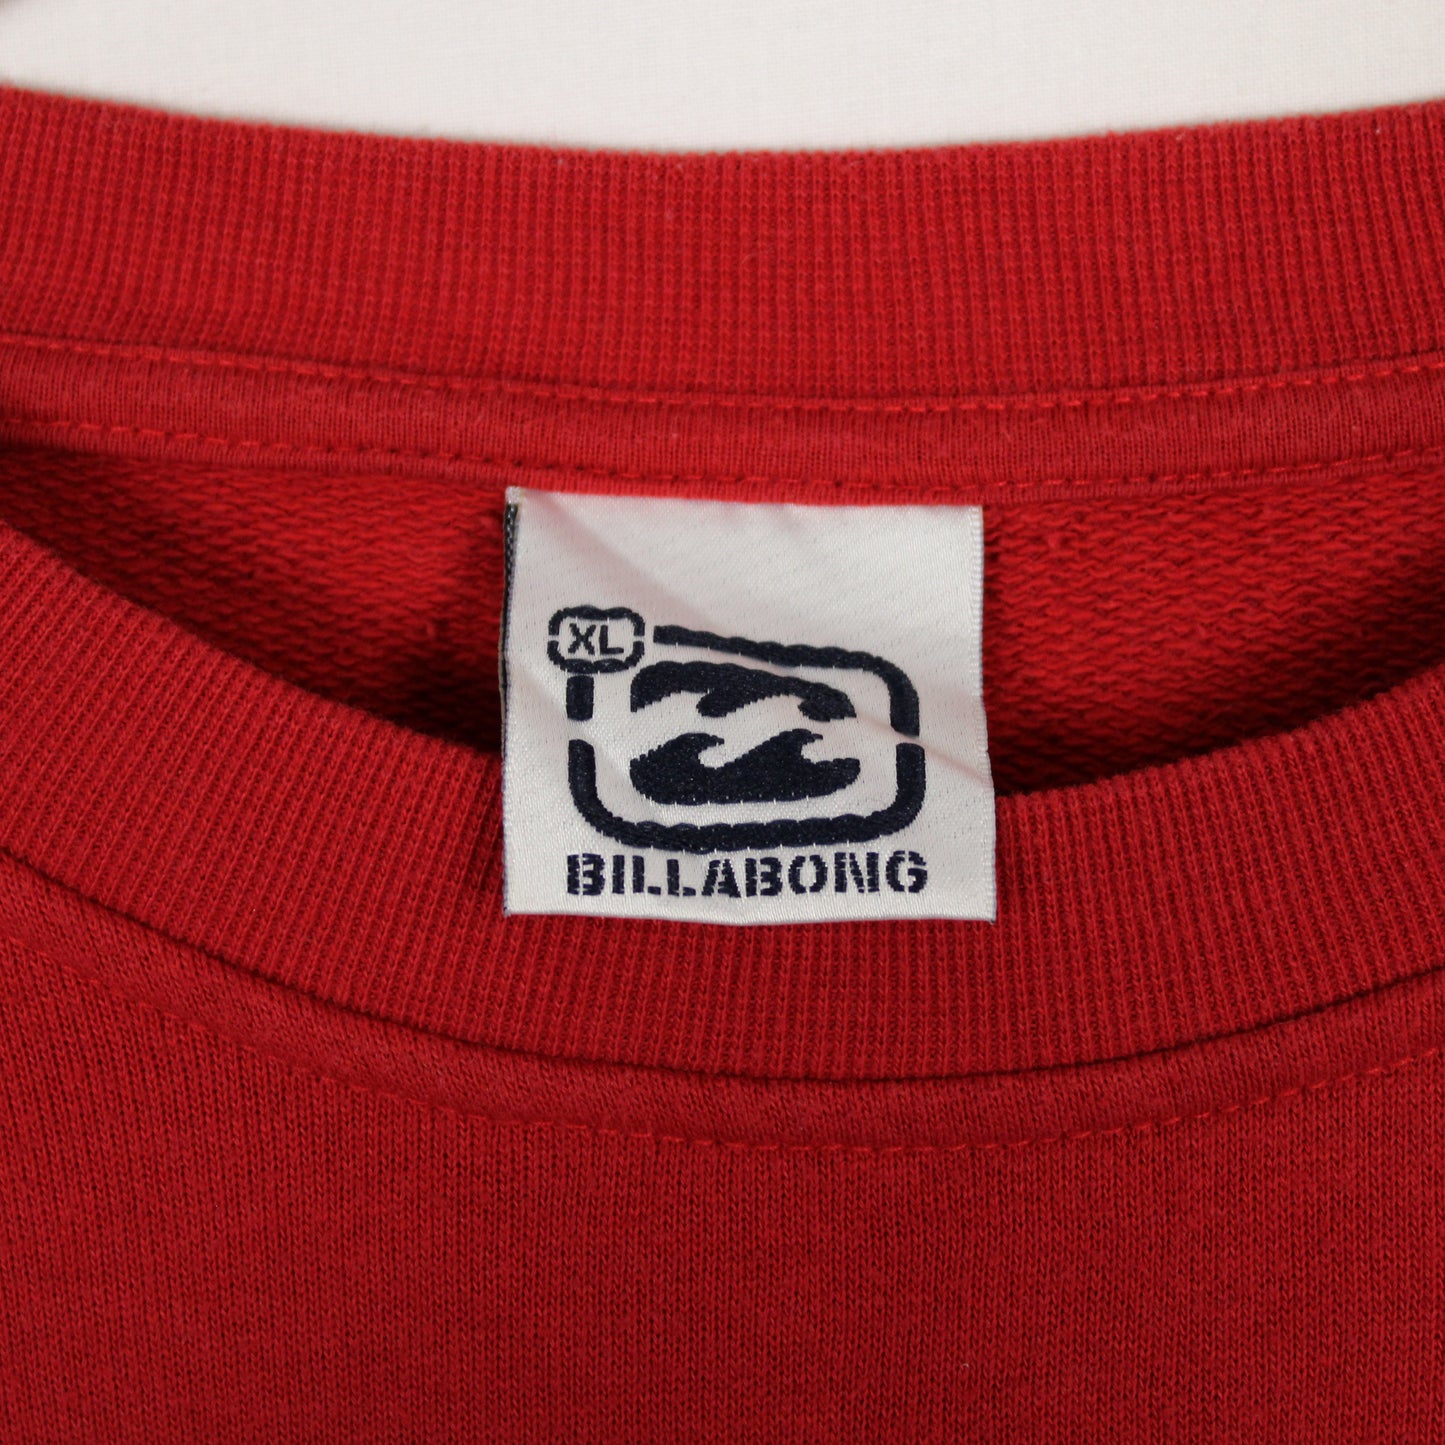 Vintage 90s Billabong Sweatshirt - XL